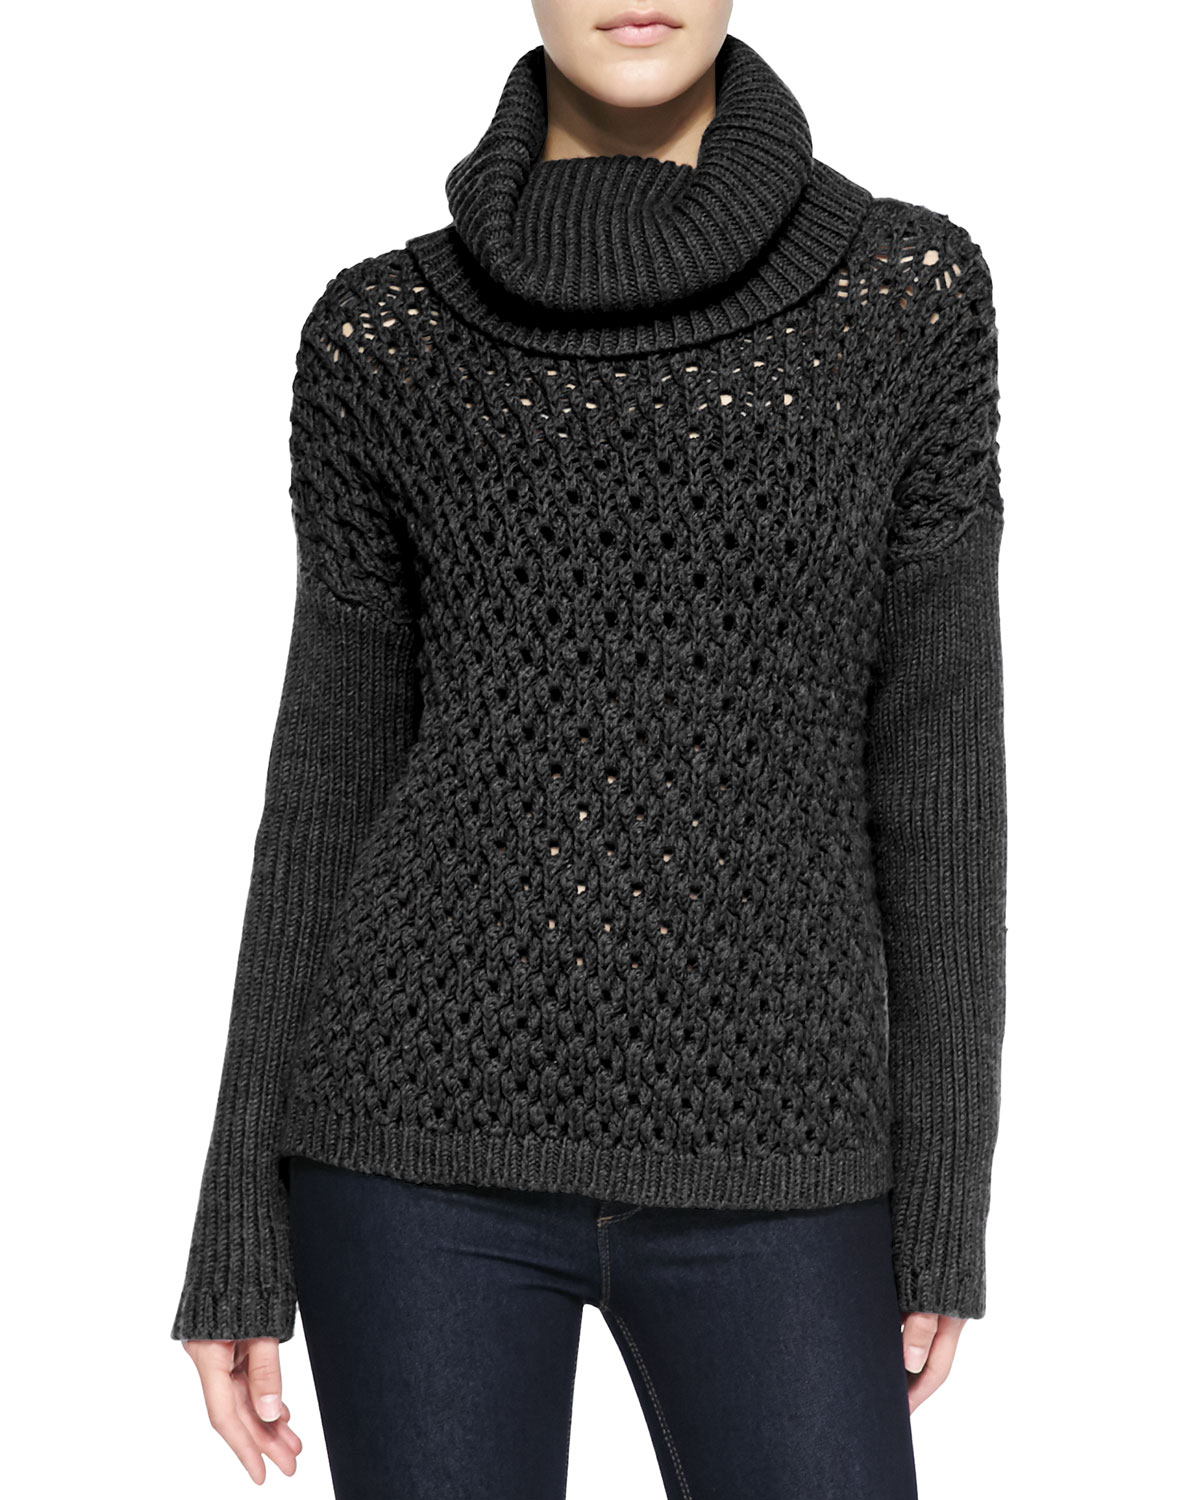 Lyst - Alice + Olivia Chunky Drop-shoulder Turtleneck Sweater in Black